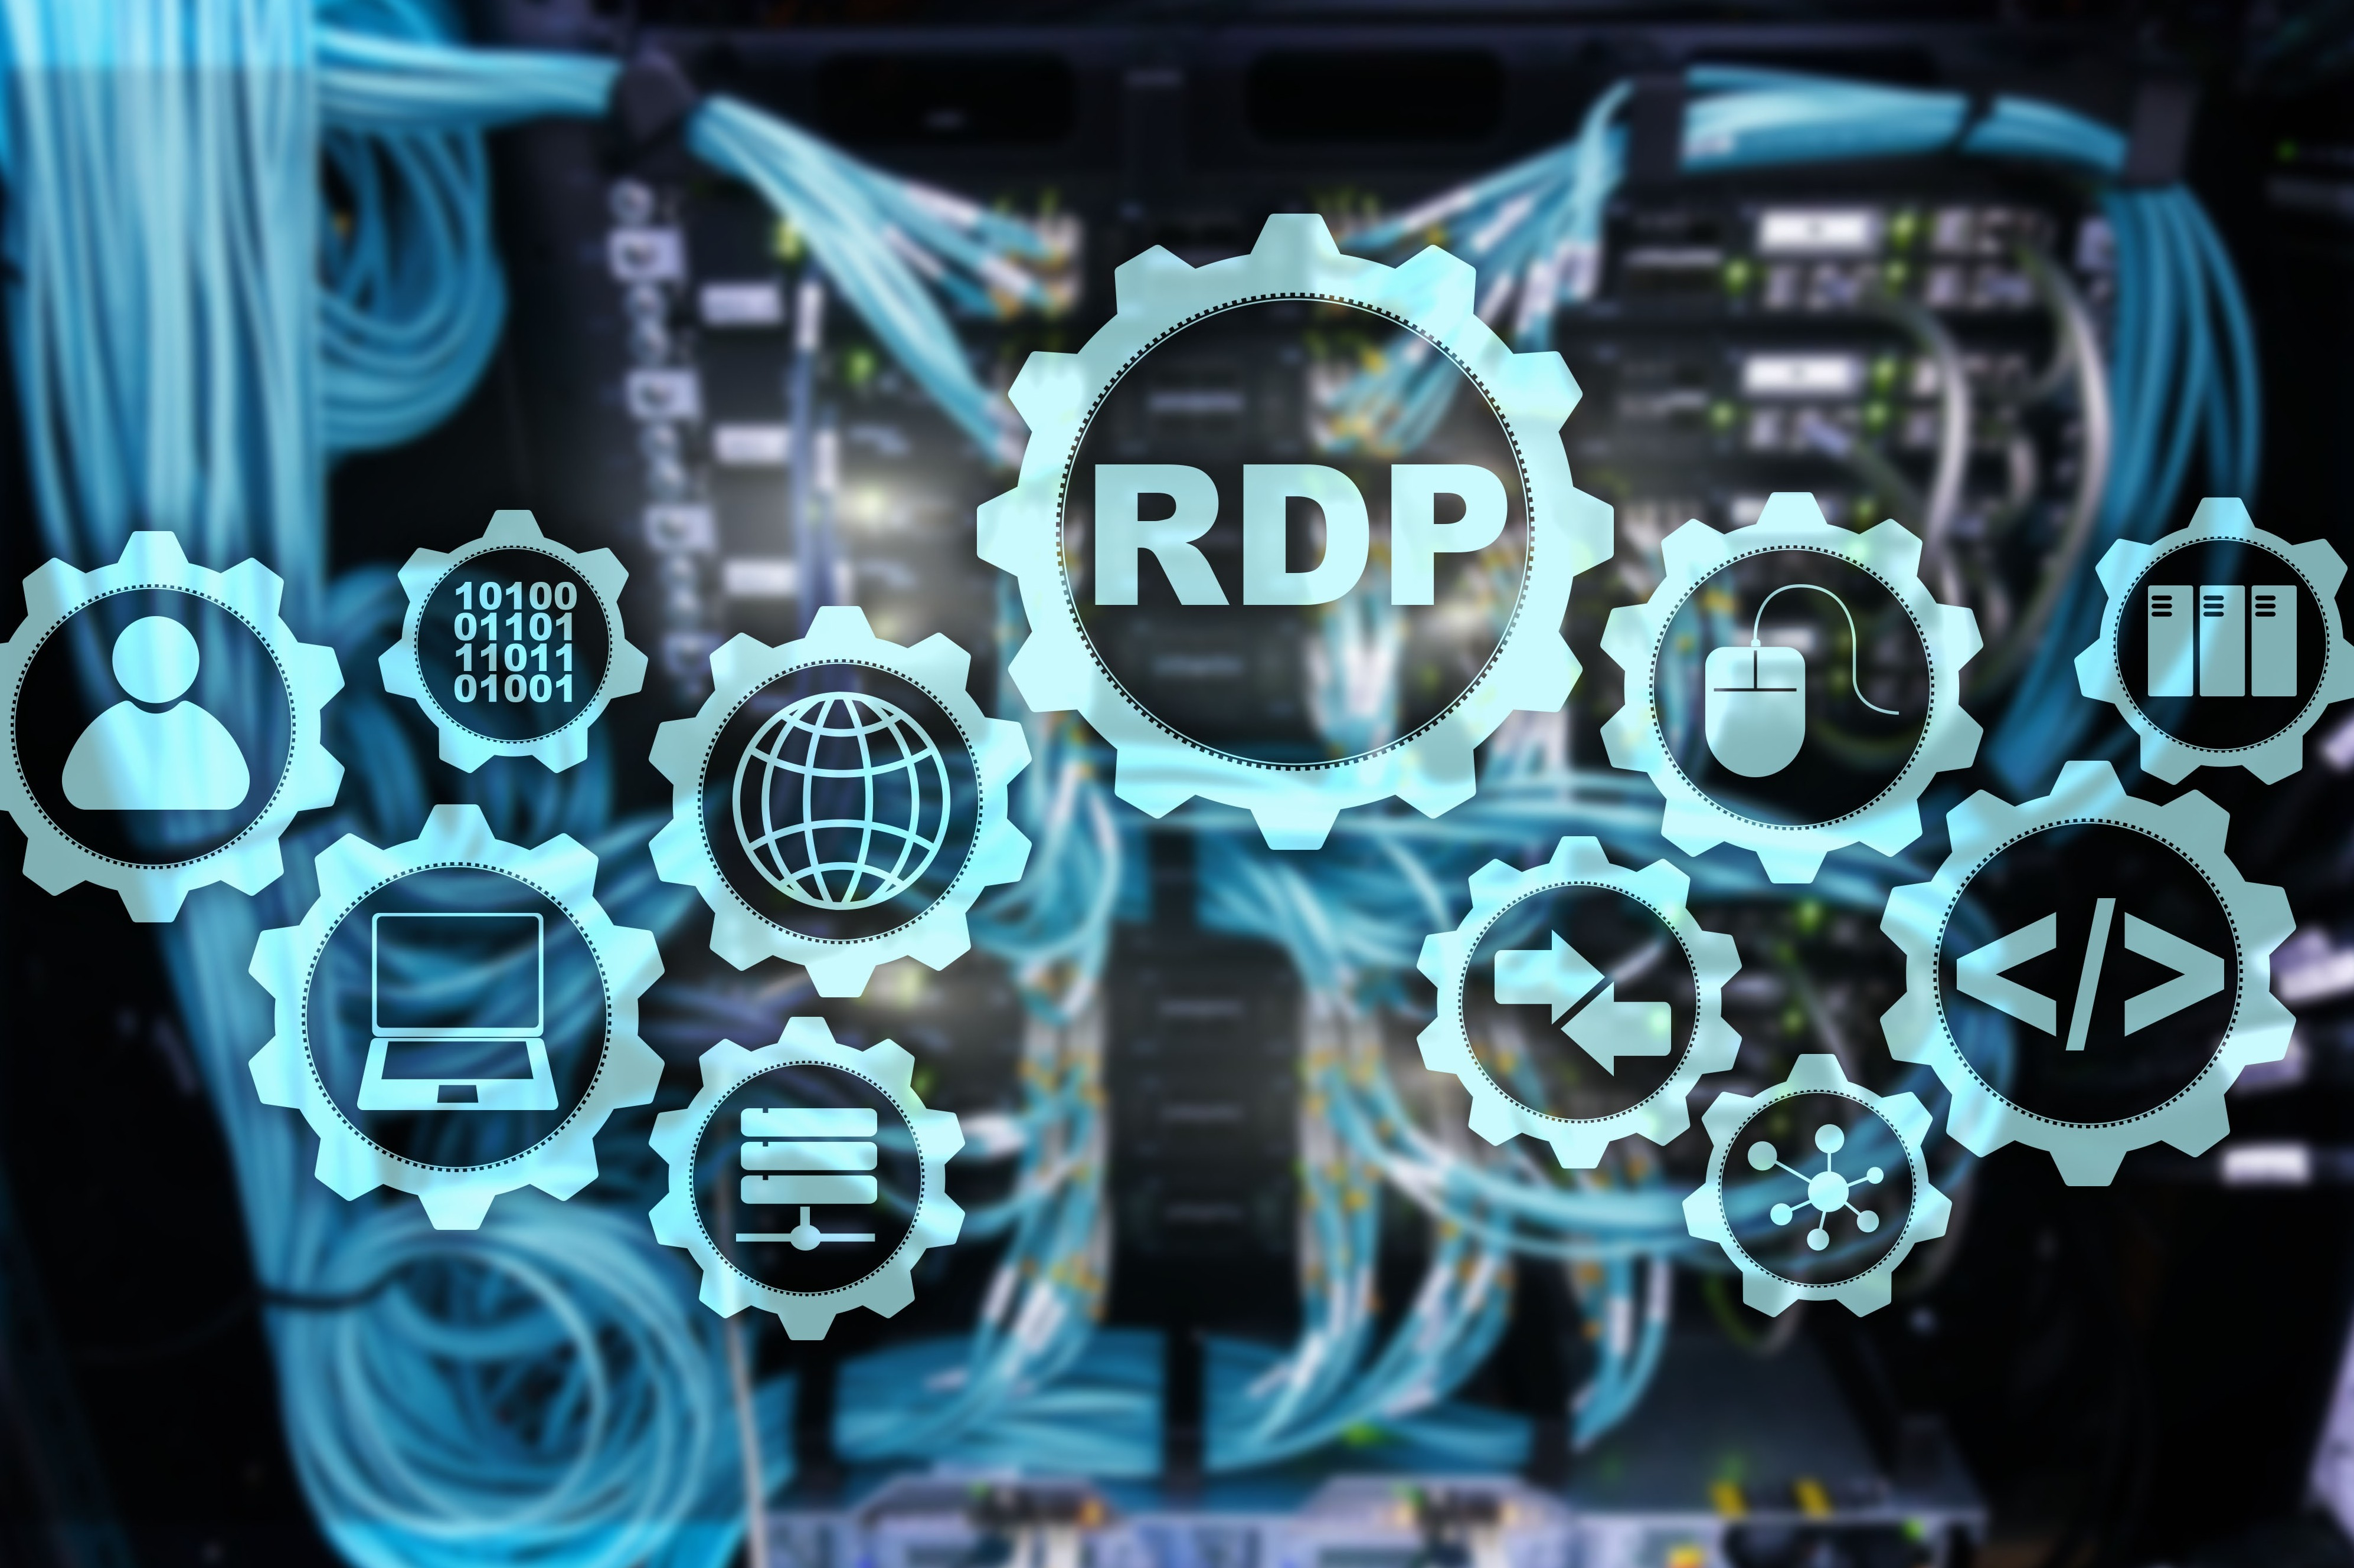 Remote Desktop Protocol RDP